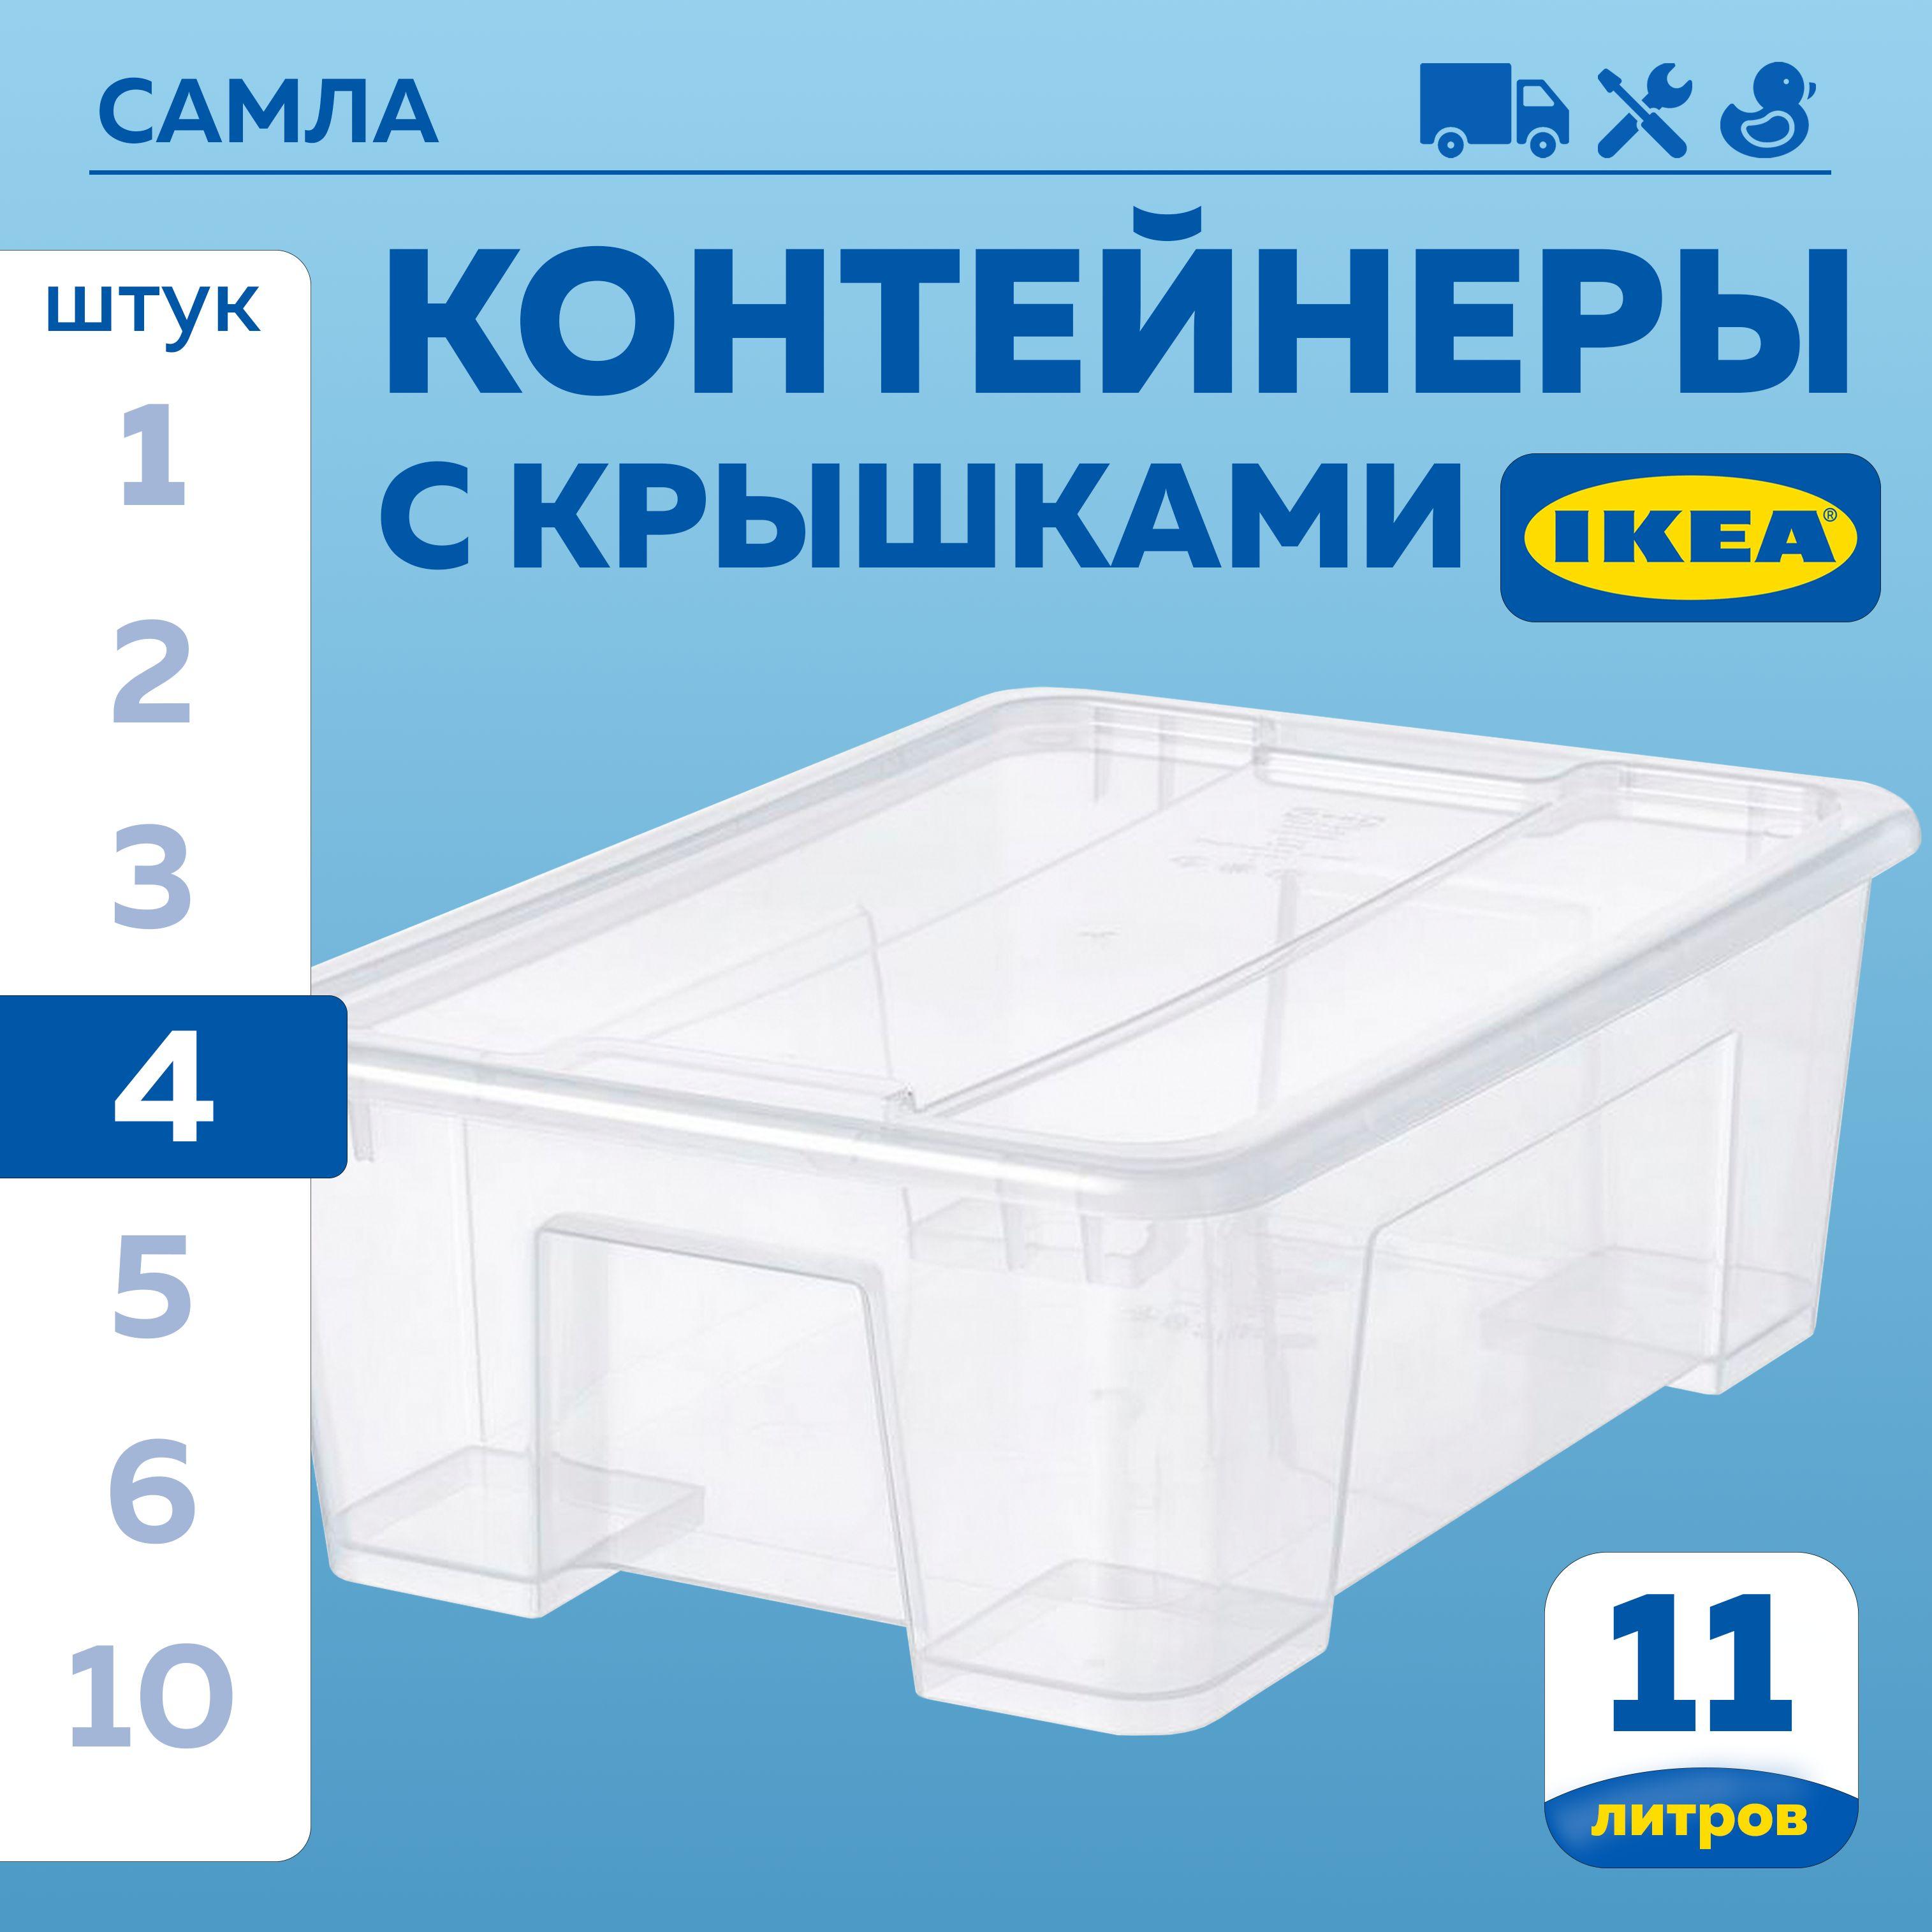 Контейнер для хранения ИКЕА САМЛА (IKEA SAMLA), 39х28х14 см, 11 л, 4 шт, ящик для хранения с крышкой